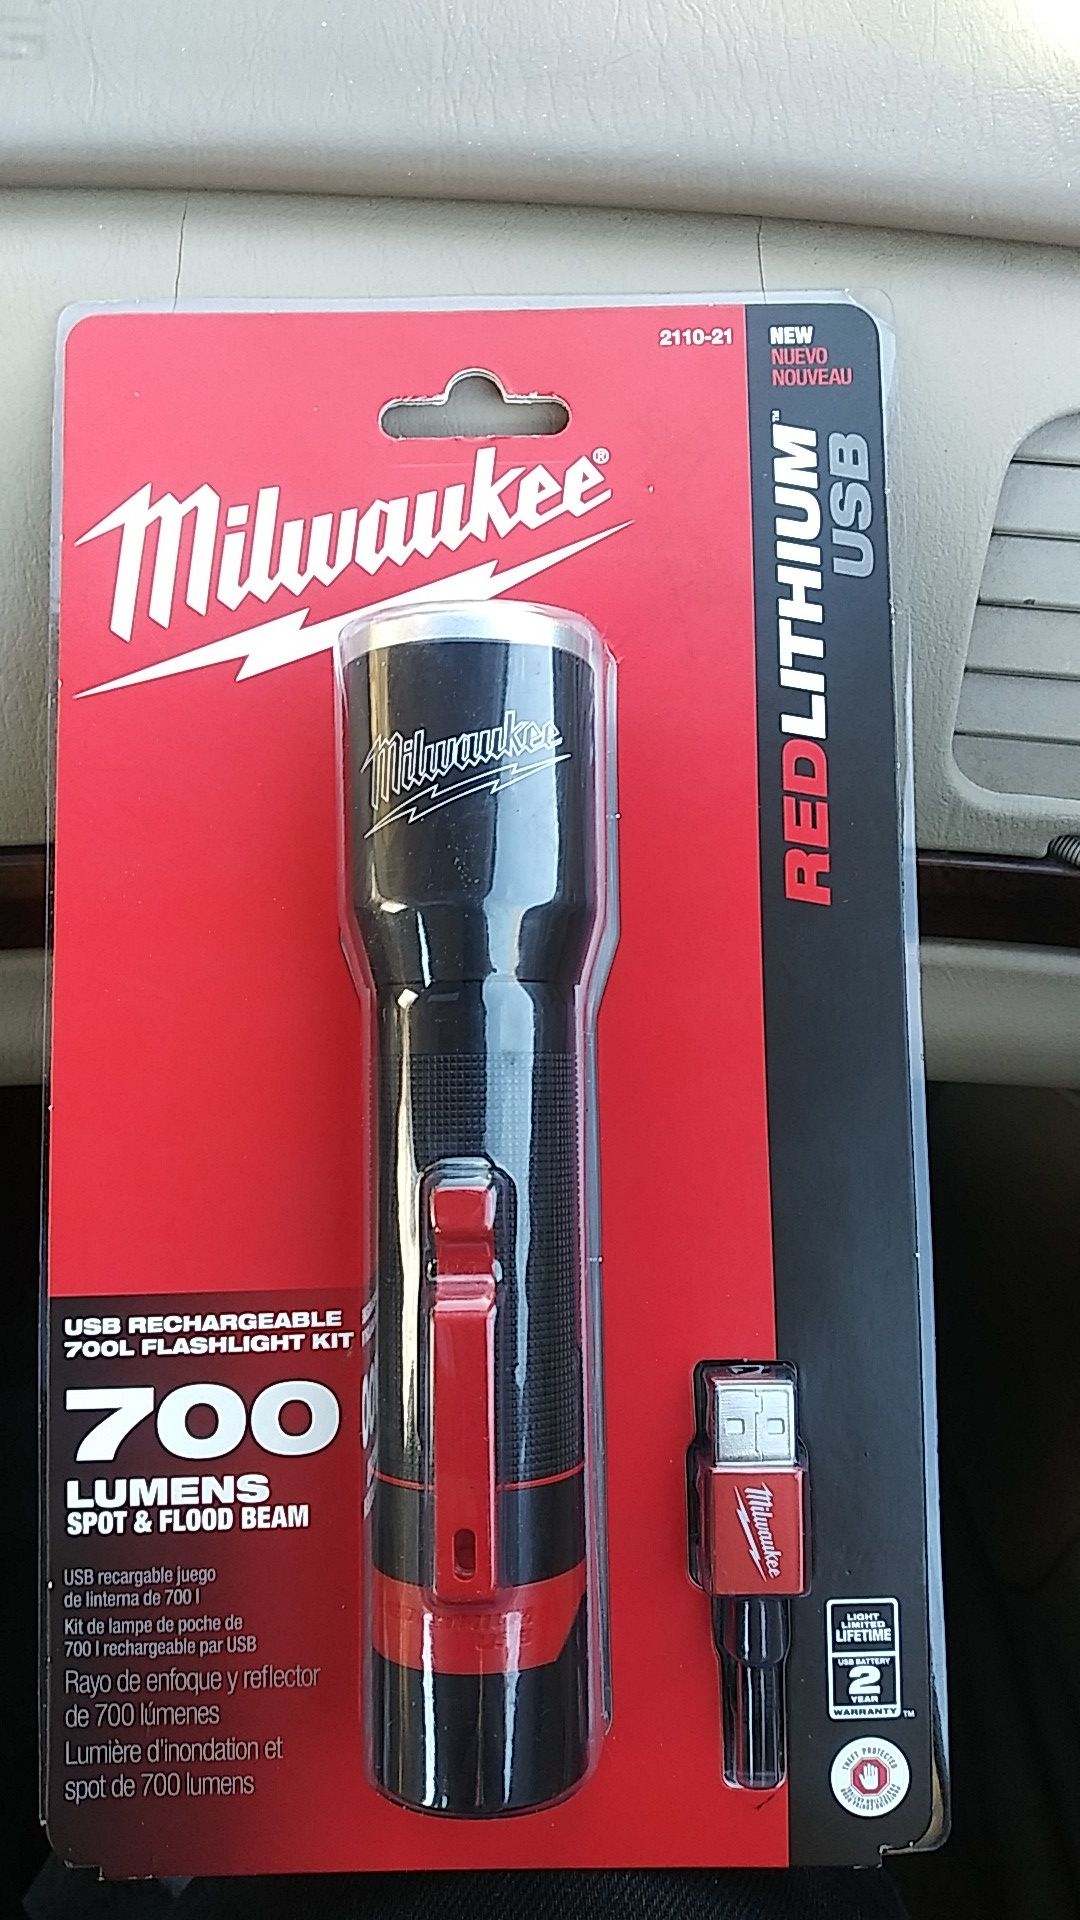 Milwaukee redlithium USB 700 lumen spot and flood beam has a lifetime limited warranty